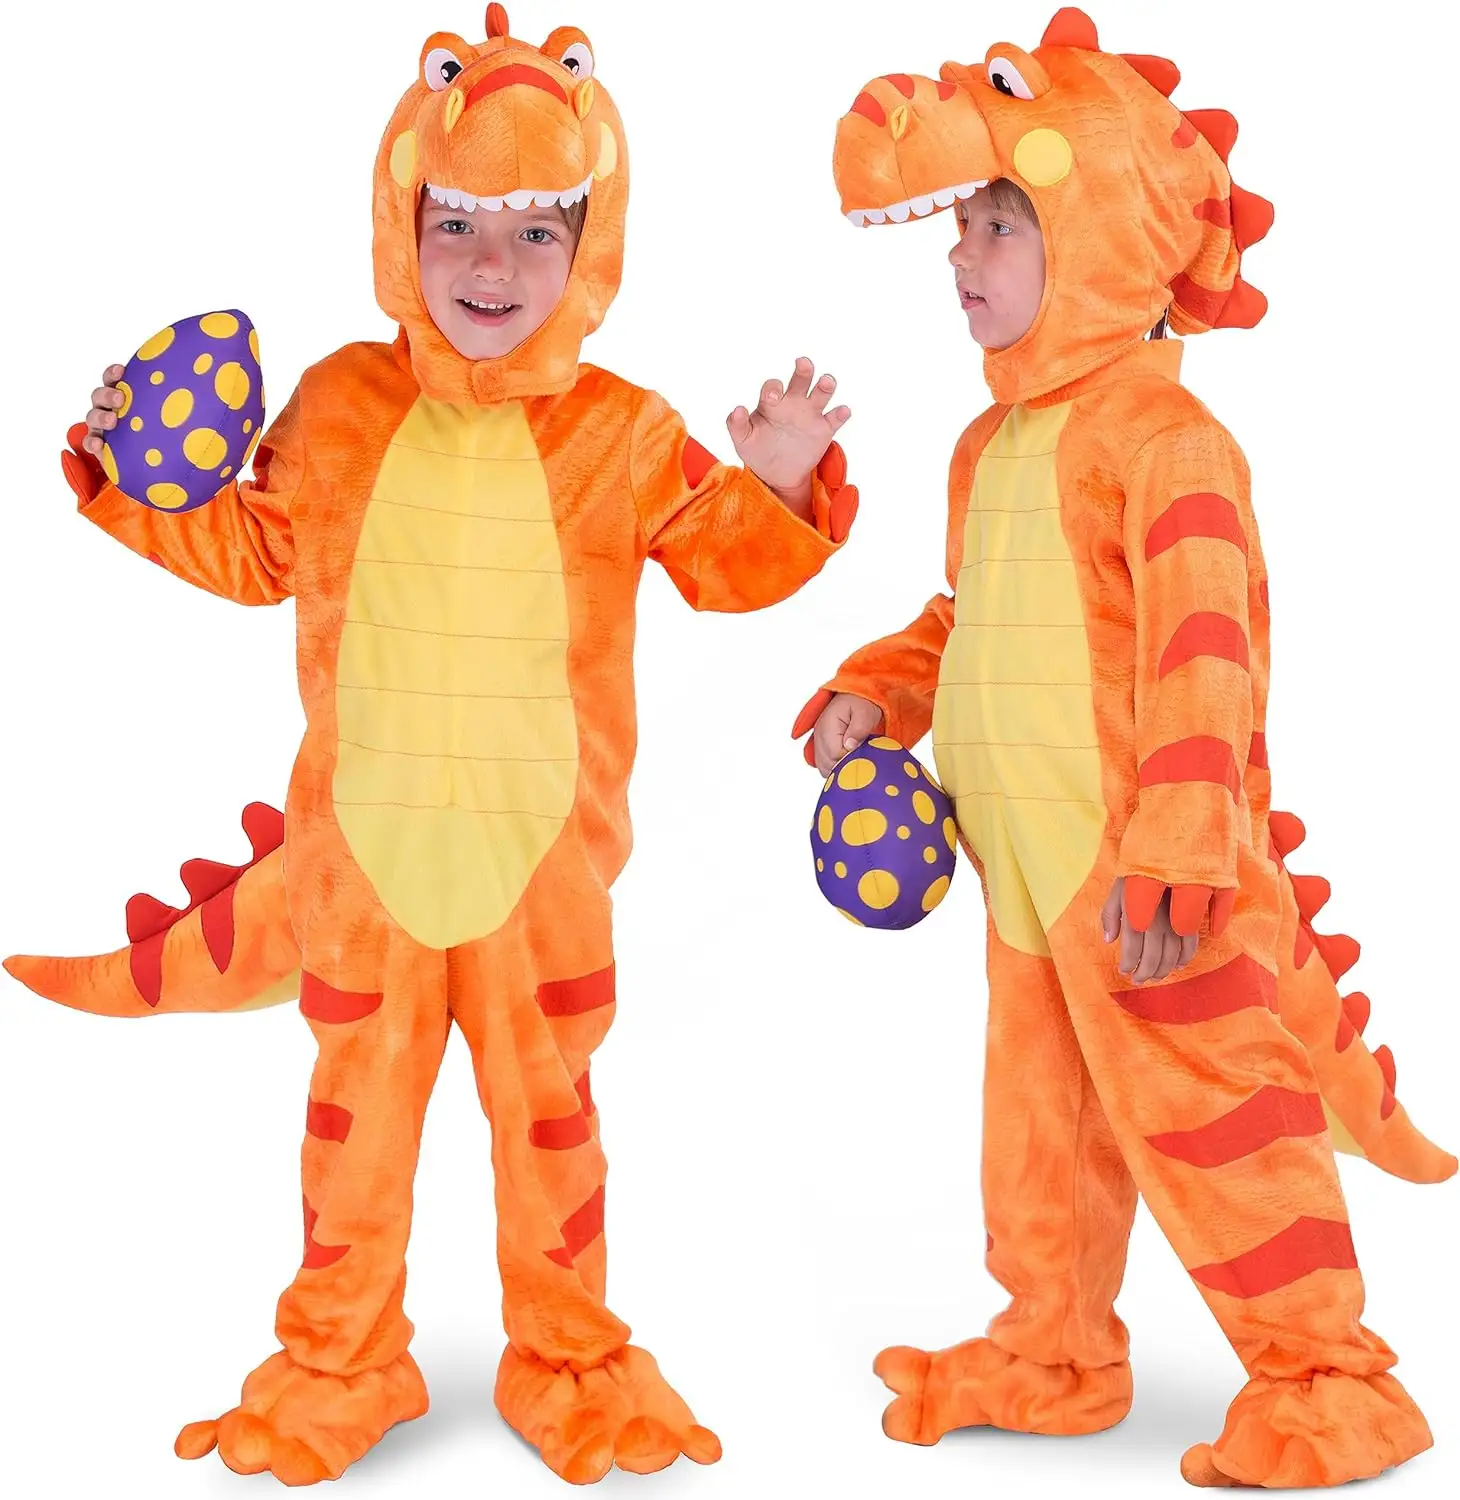 Creations Halloween Child Orange Dinosaur T-Rex Realistic Dinosaur Costume Dress Up for Kids